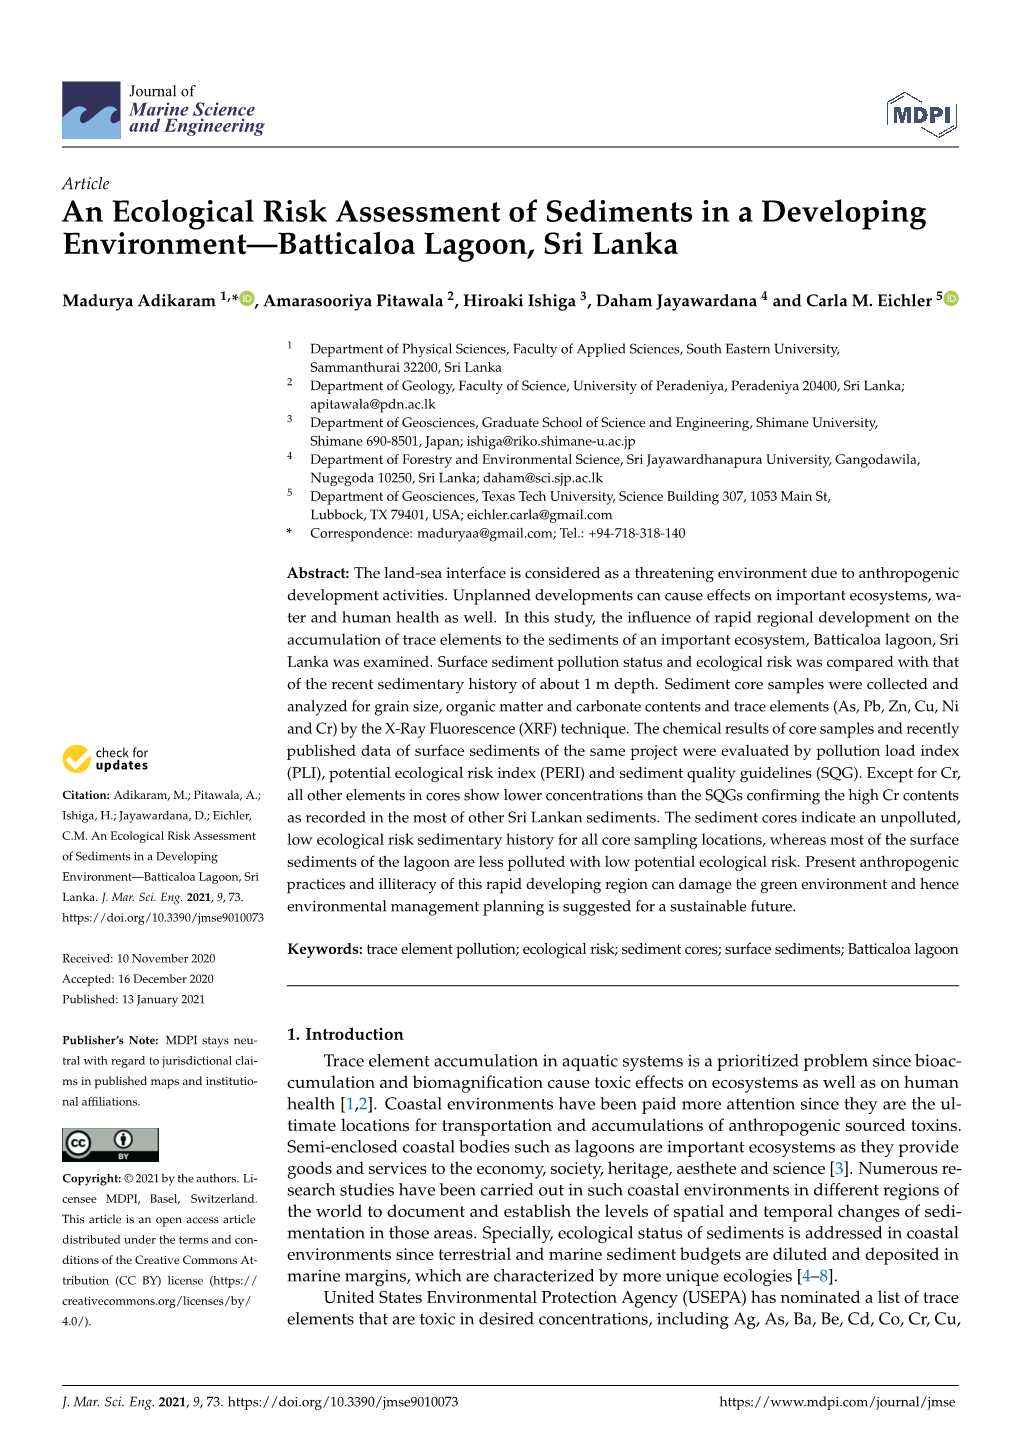 An Ecological Risk Assessment of Sediments in a Developing Environment—Batticaloa Lagoon, Sri Lanka